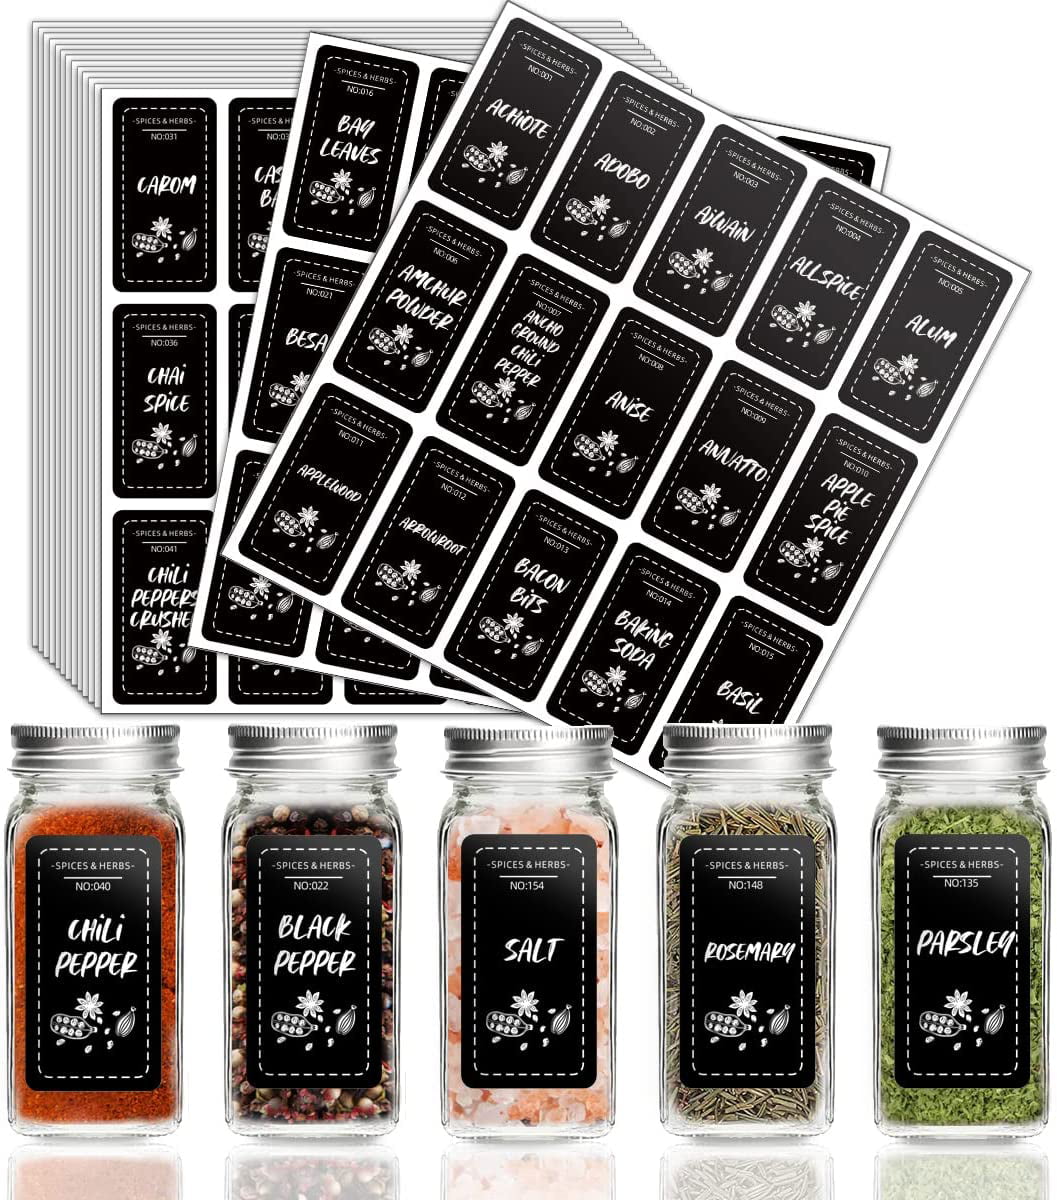 Waterproof Spice Labels For Spice Bottles And Jars - Blackboard